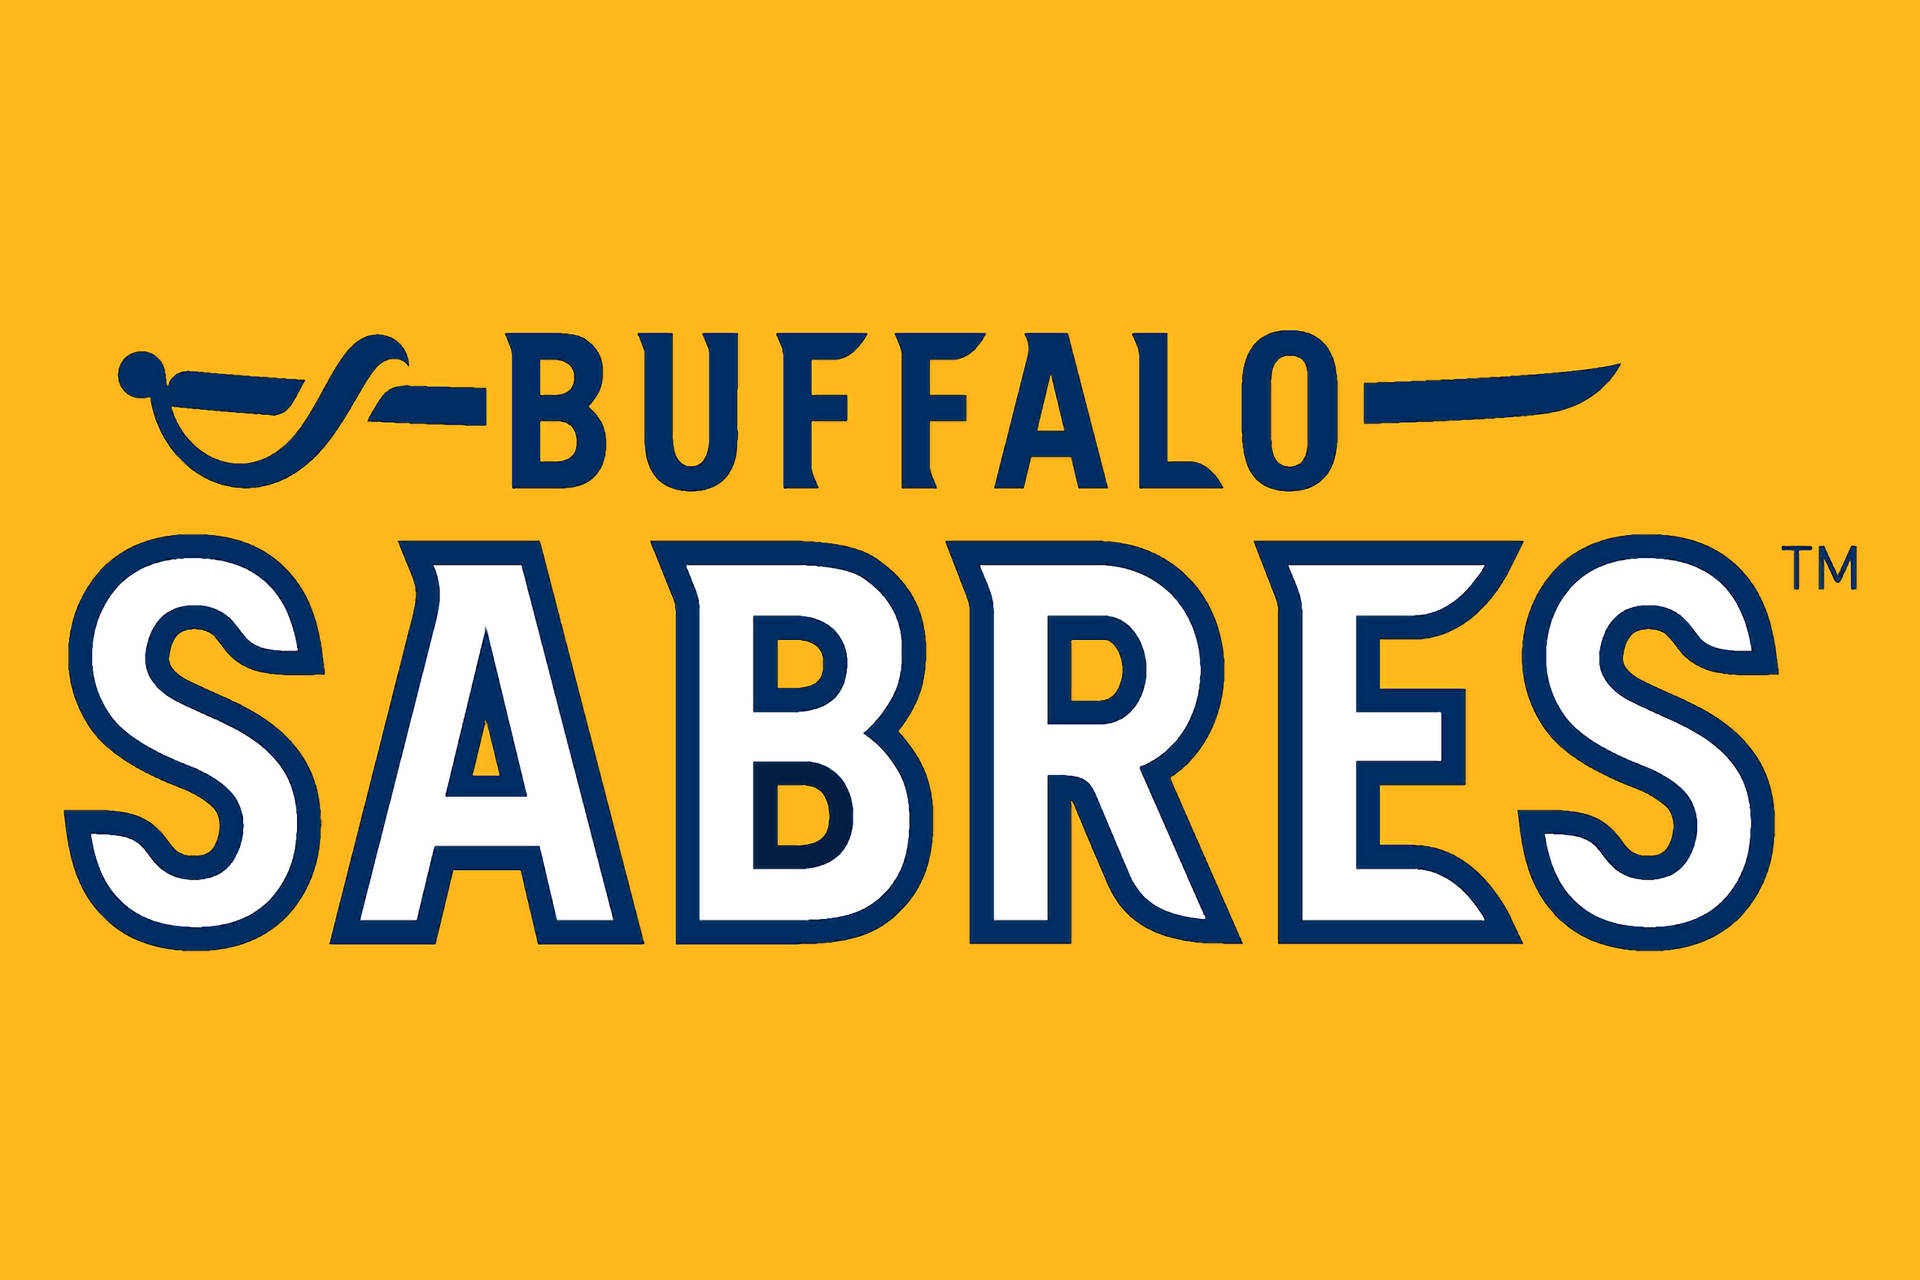 Buffalo Sabres Yellow Text